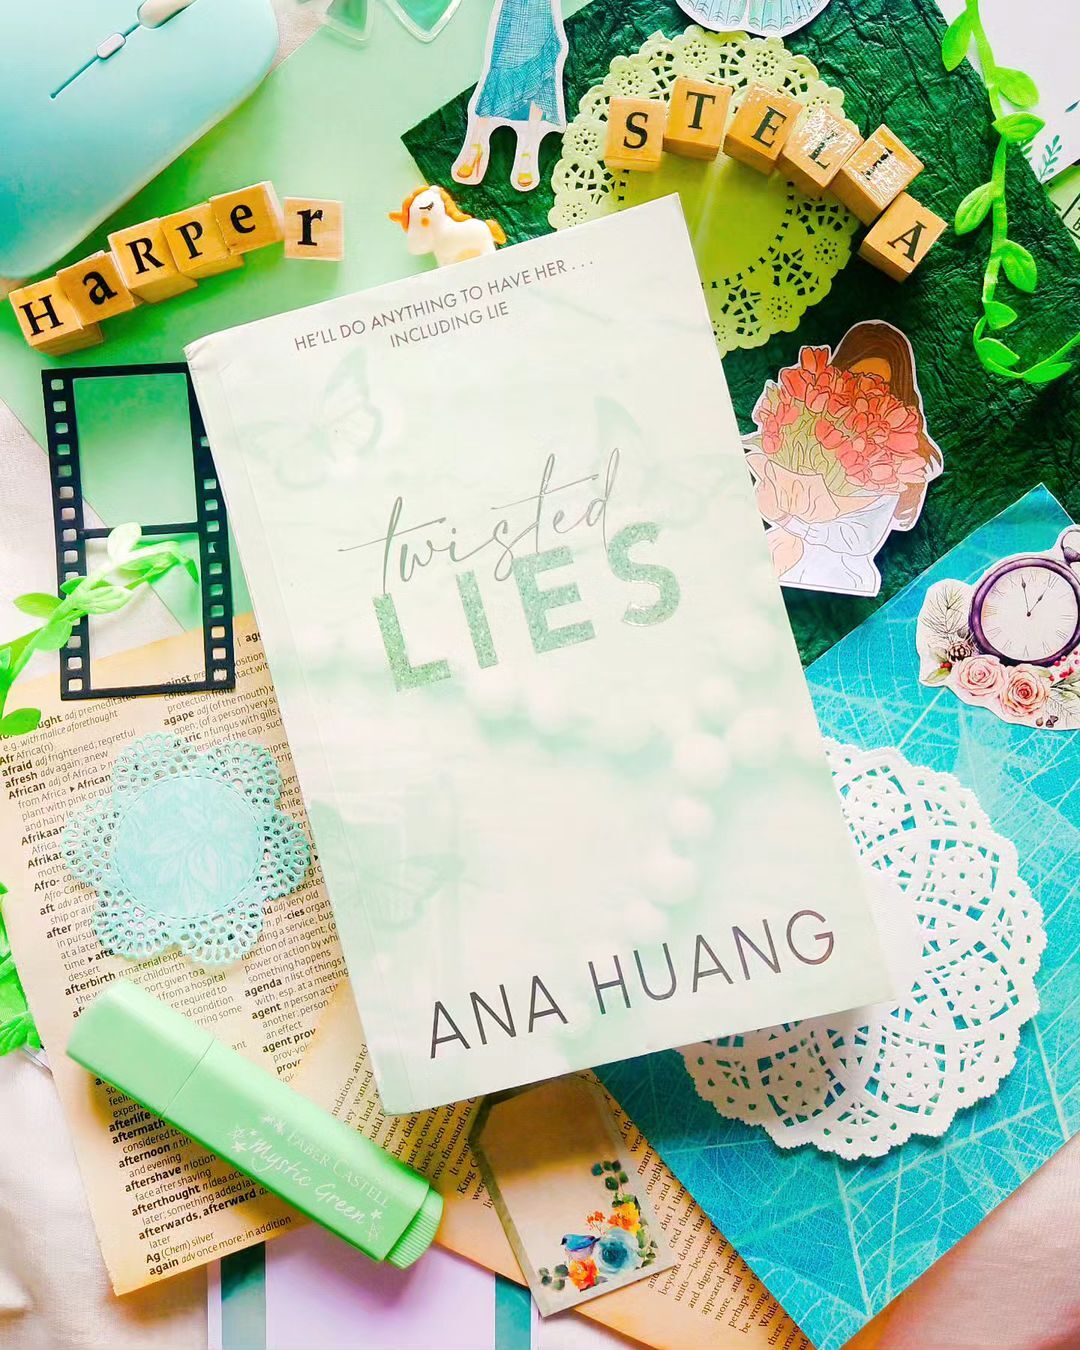 TWISTED LIES - Ana Huang